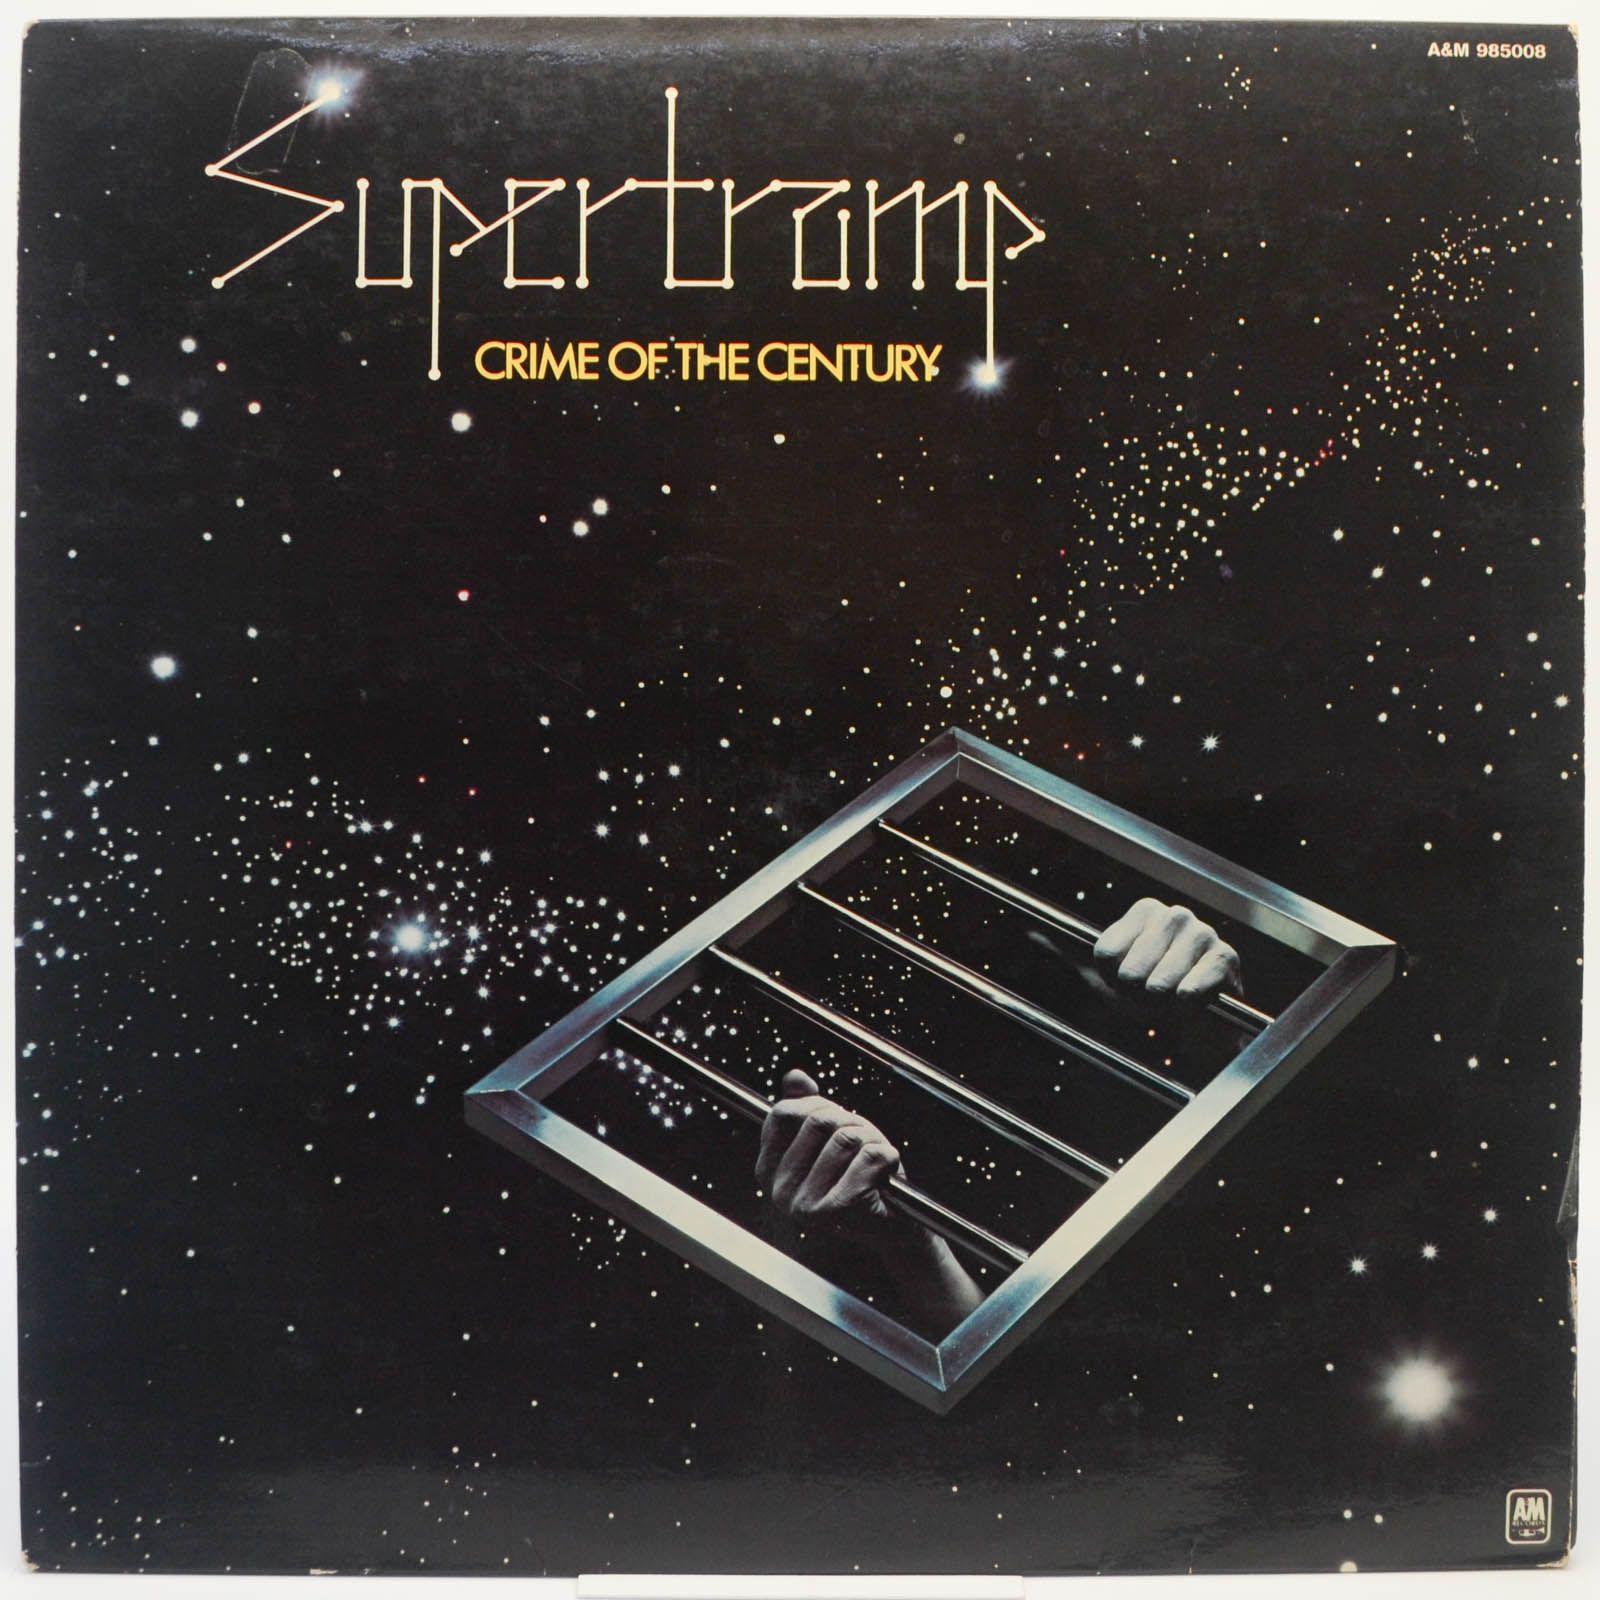 Supertramp — Crime Of The Century, 1974